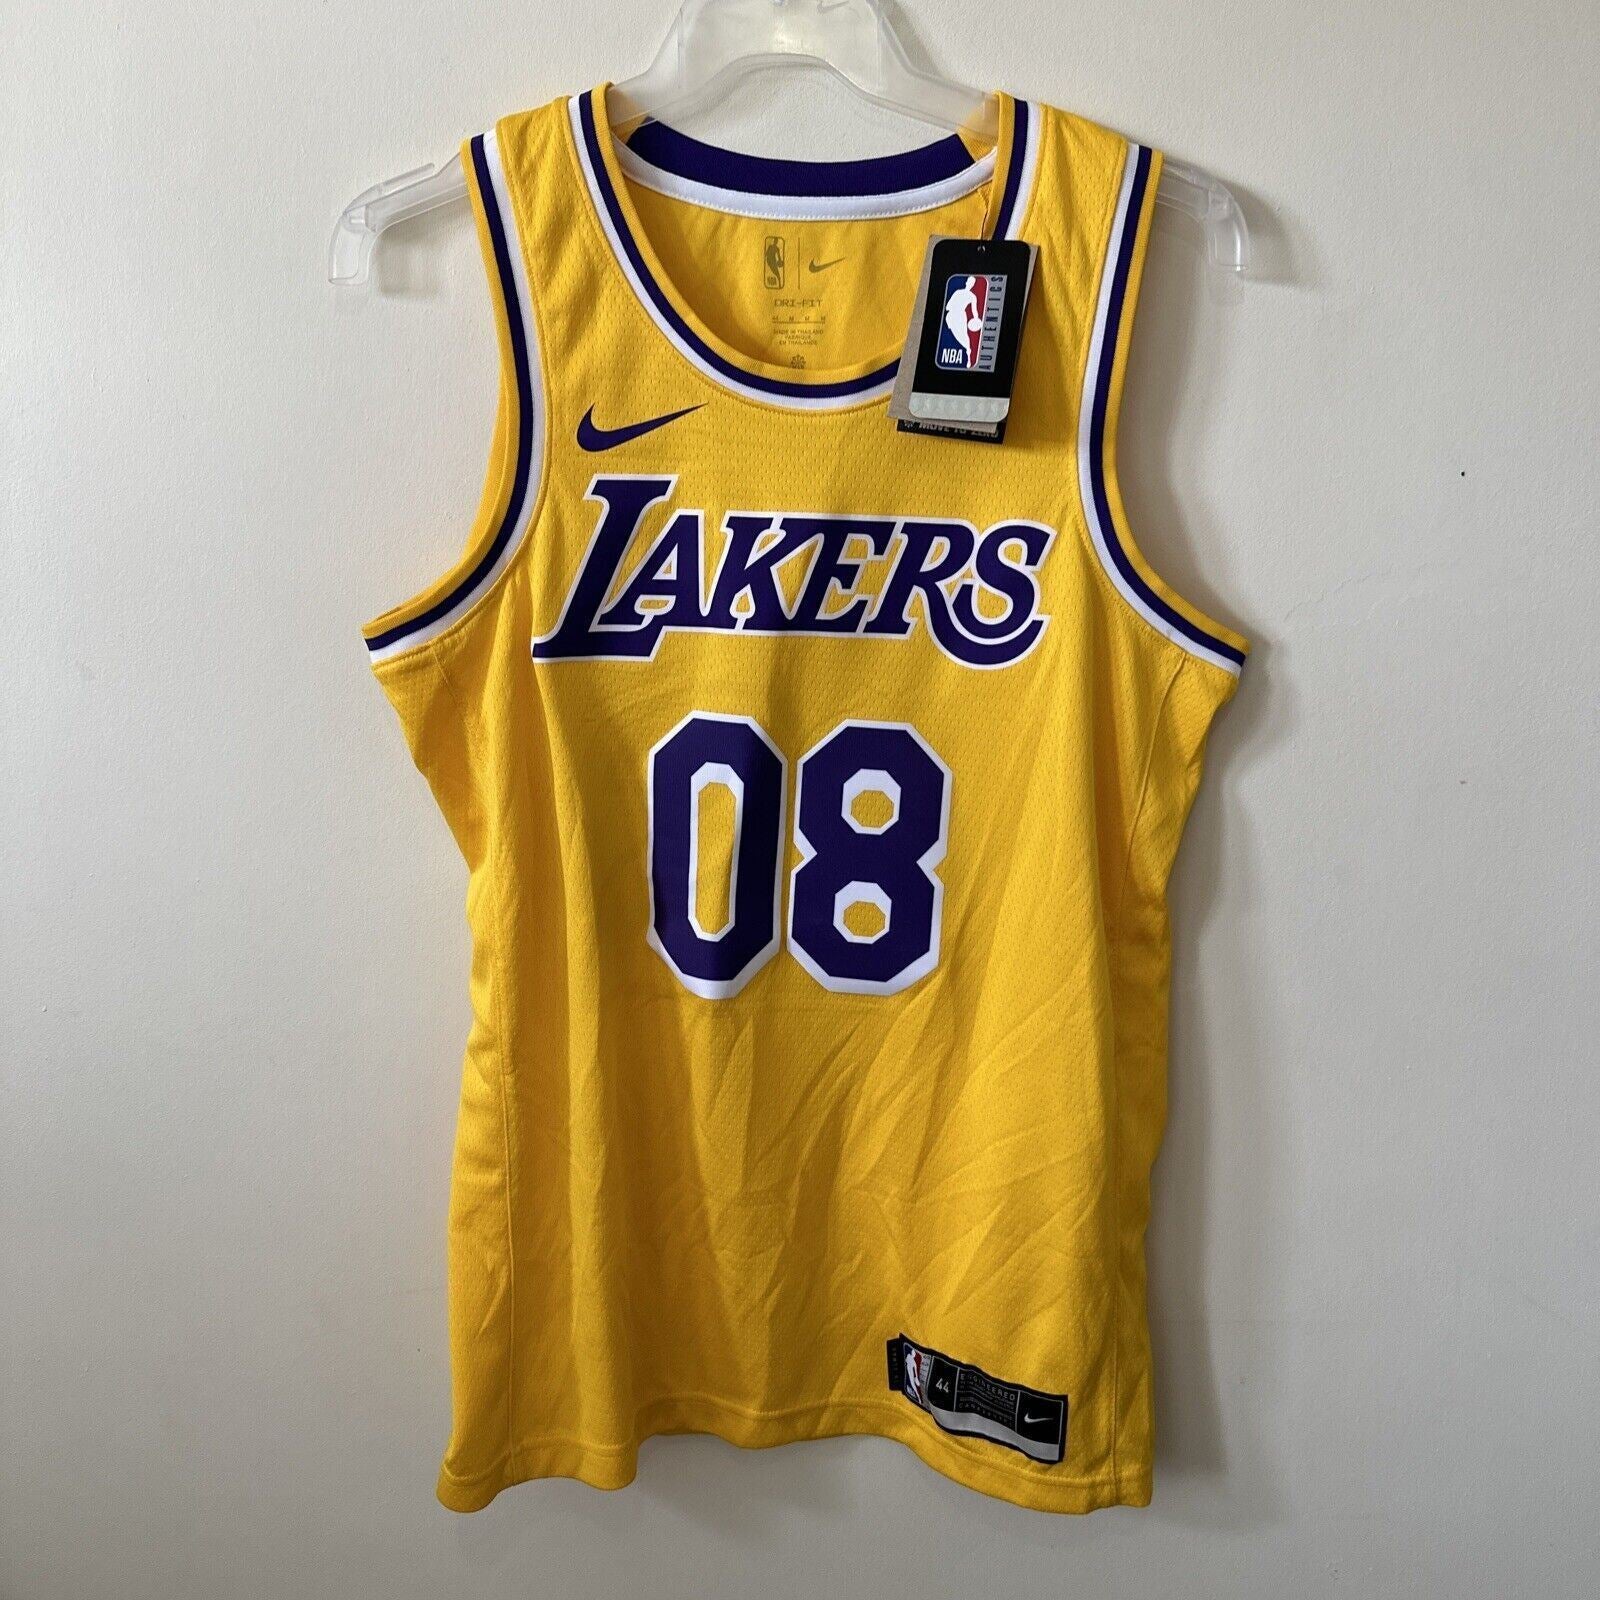 Nike NBA LA Lakers Swingman Edition Jersey KAYDEN 08 Basketball Men Medium